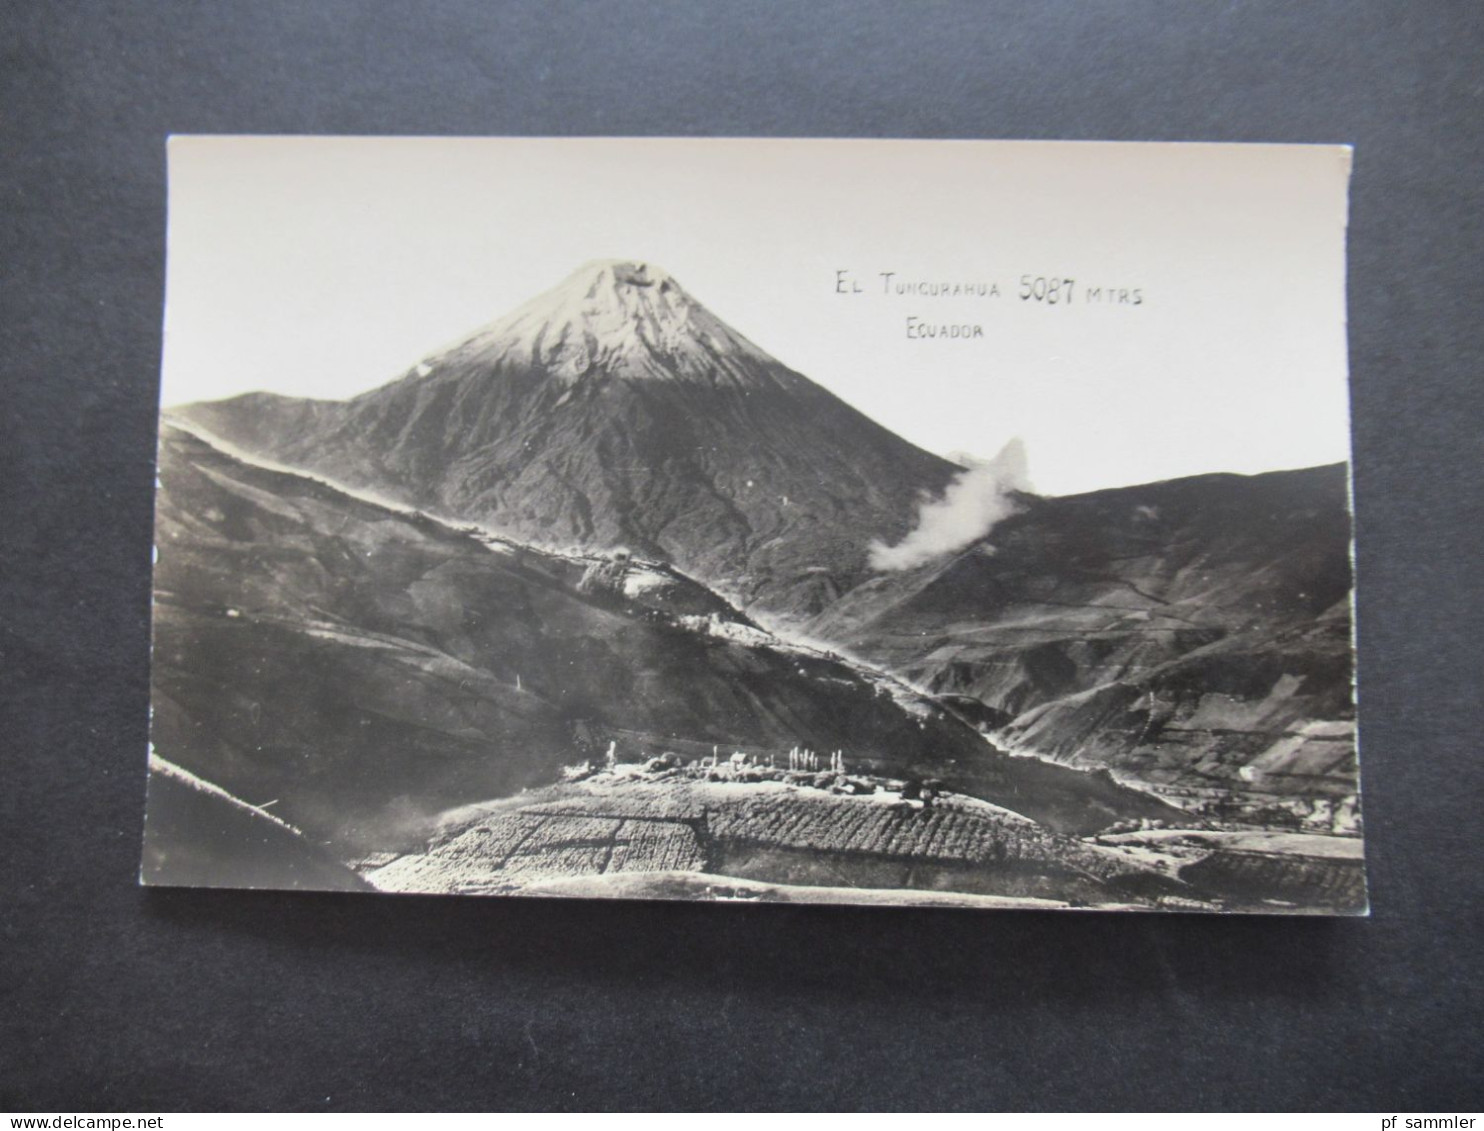 Echtfoto AK Ca. 1920er Jahre El Tungurahua 5087 Mtrs. Ecuador / Vulkan - Equateur